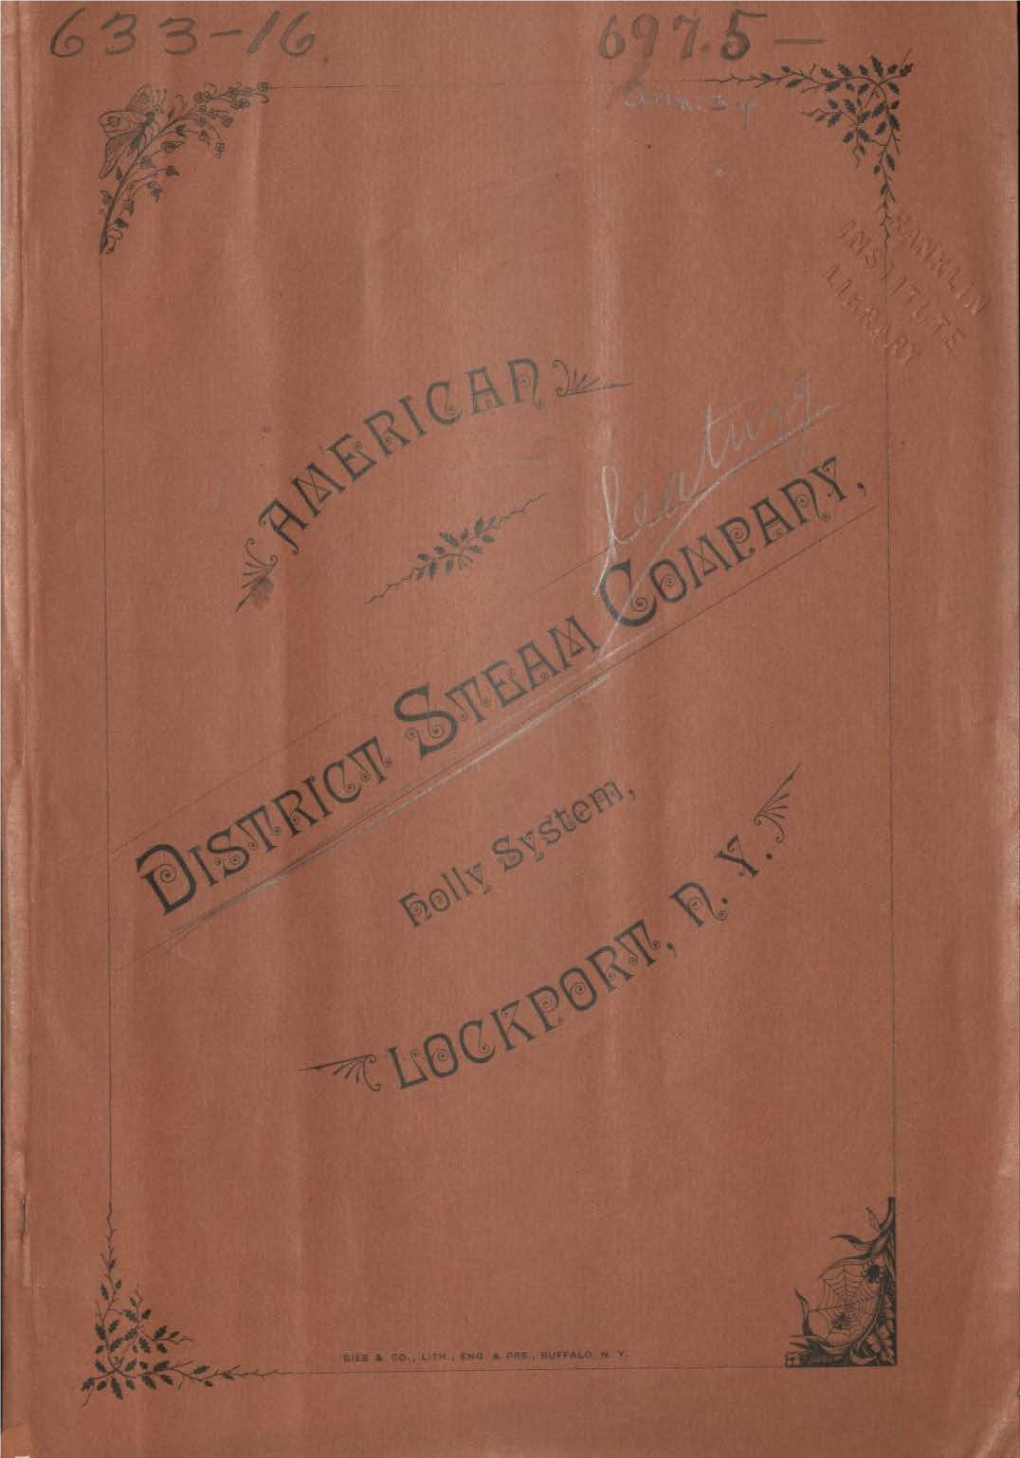 1890 American District Steam Company